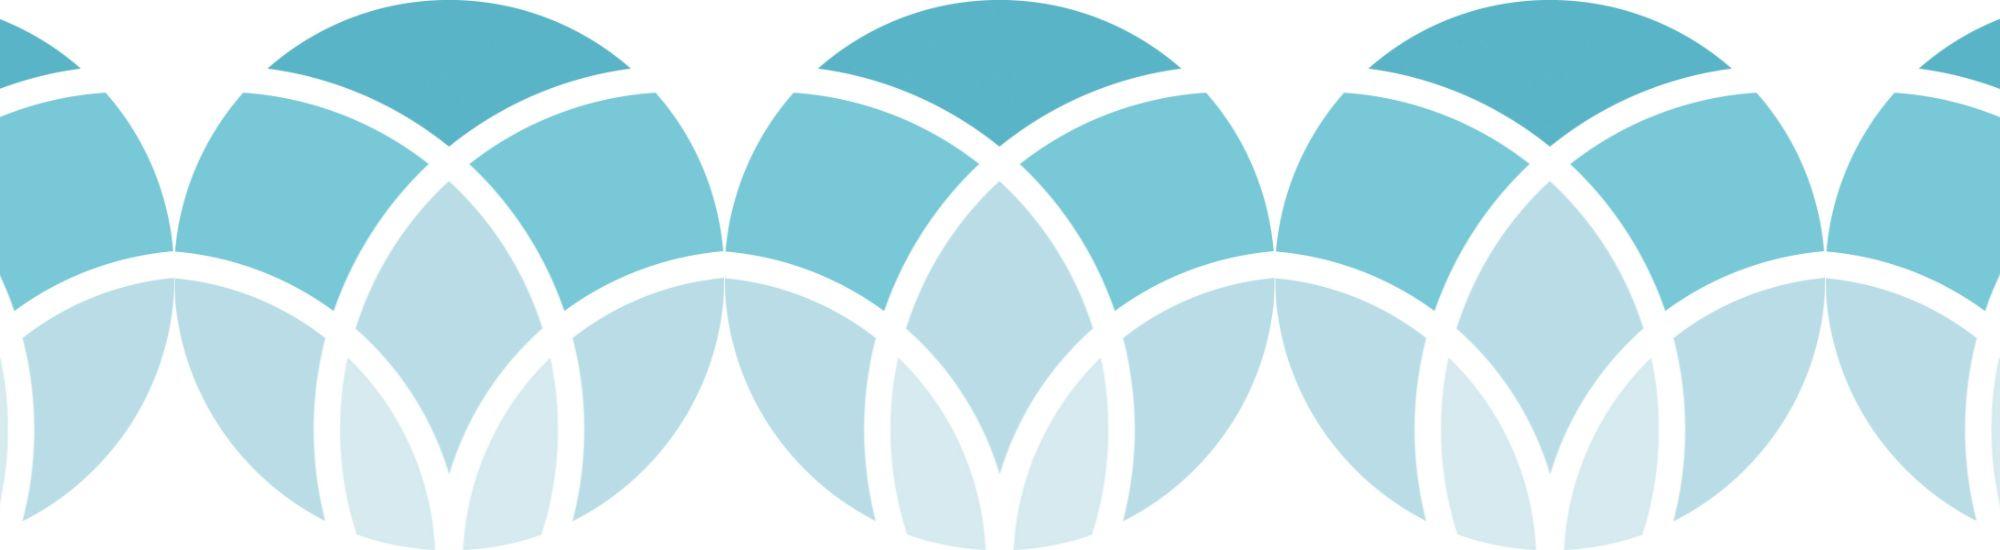 repeating Unity logo